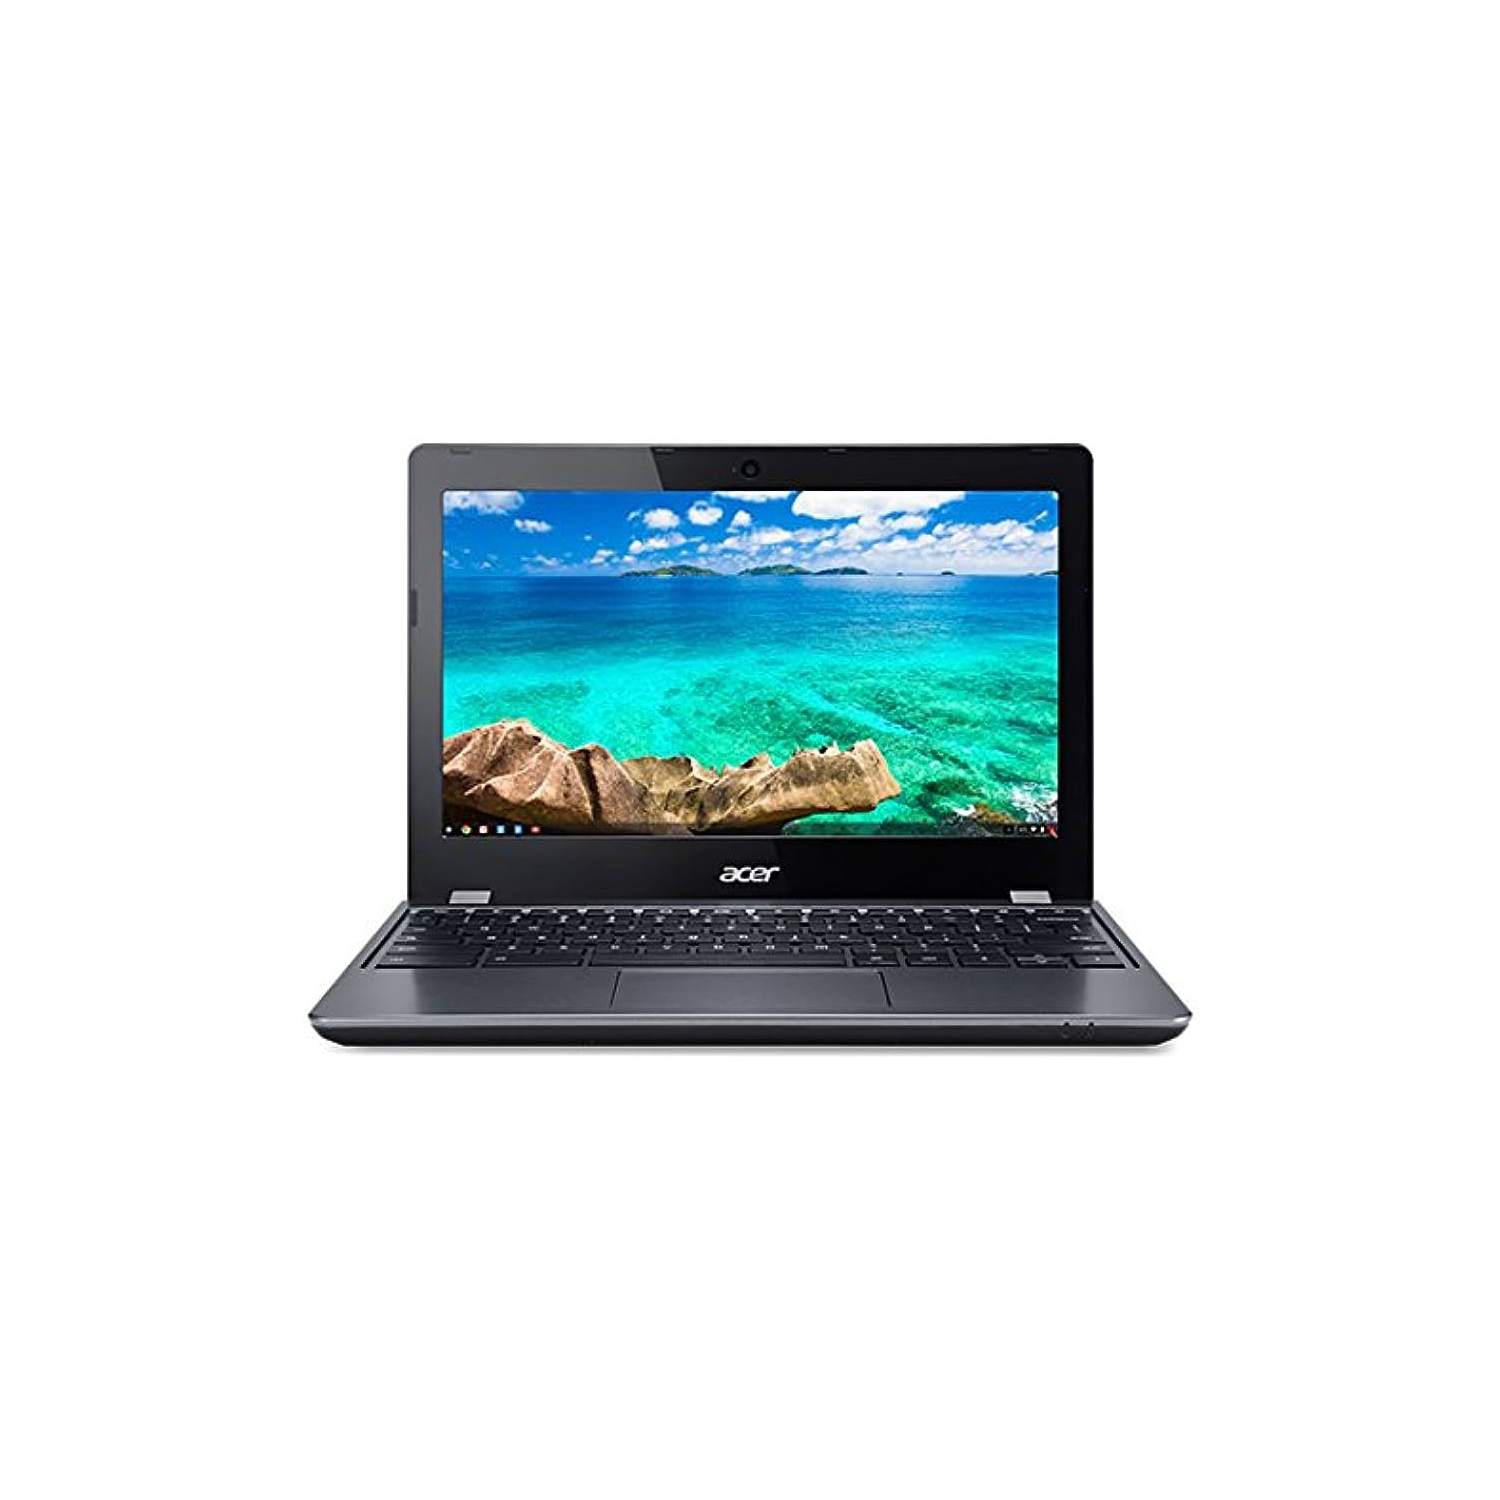 Refurbished (Good) - Acer C740 Chromebook C740-C4PE 4GB RAM 16GB SSD Hard drive 11.6" Screen 1366x768 Webcam Backlit Keyboard Non Touch Chrome OS English